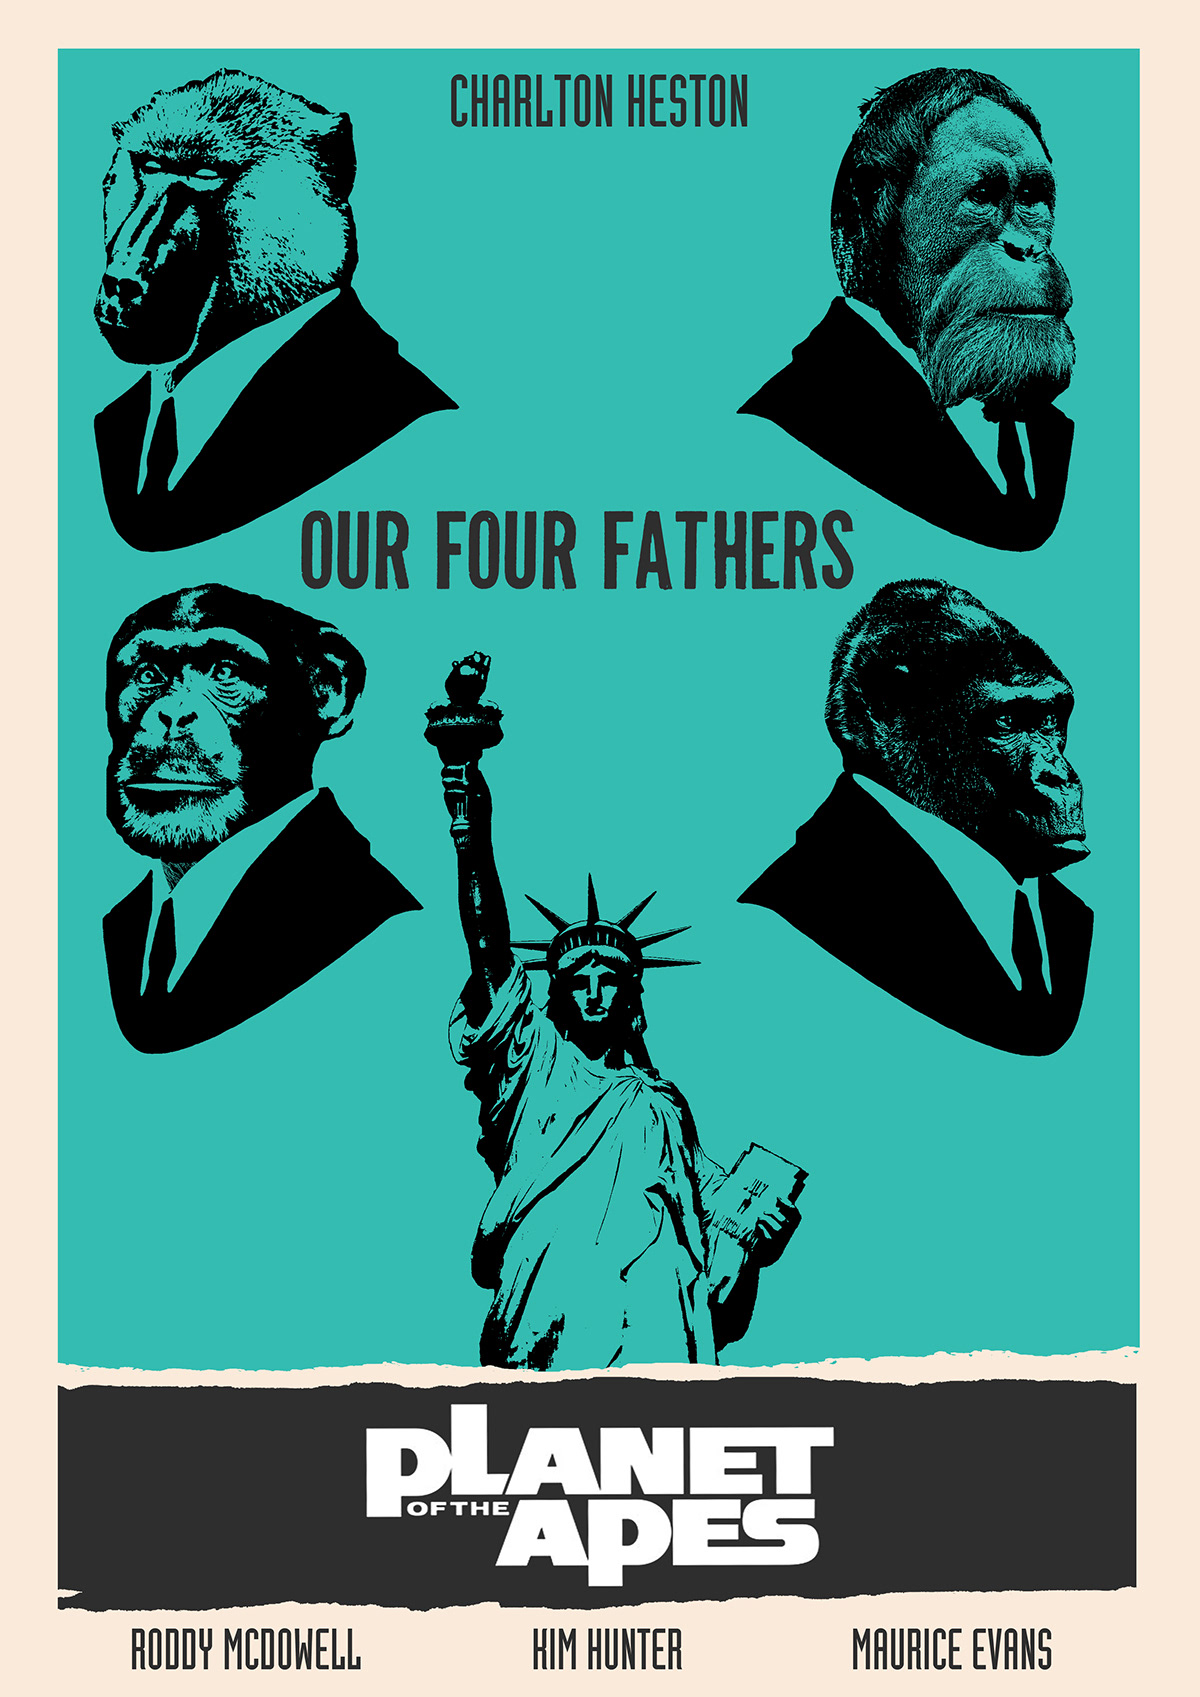 planet of the apes iron man film poster photoshop creative film design simple Original graphic